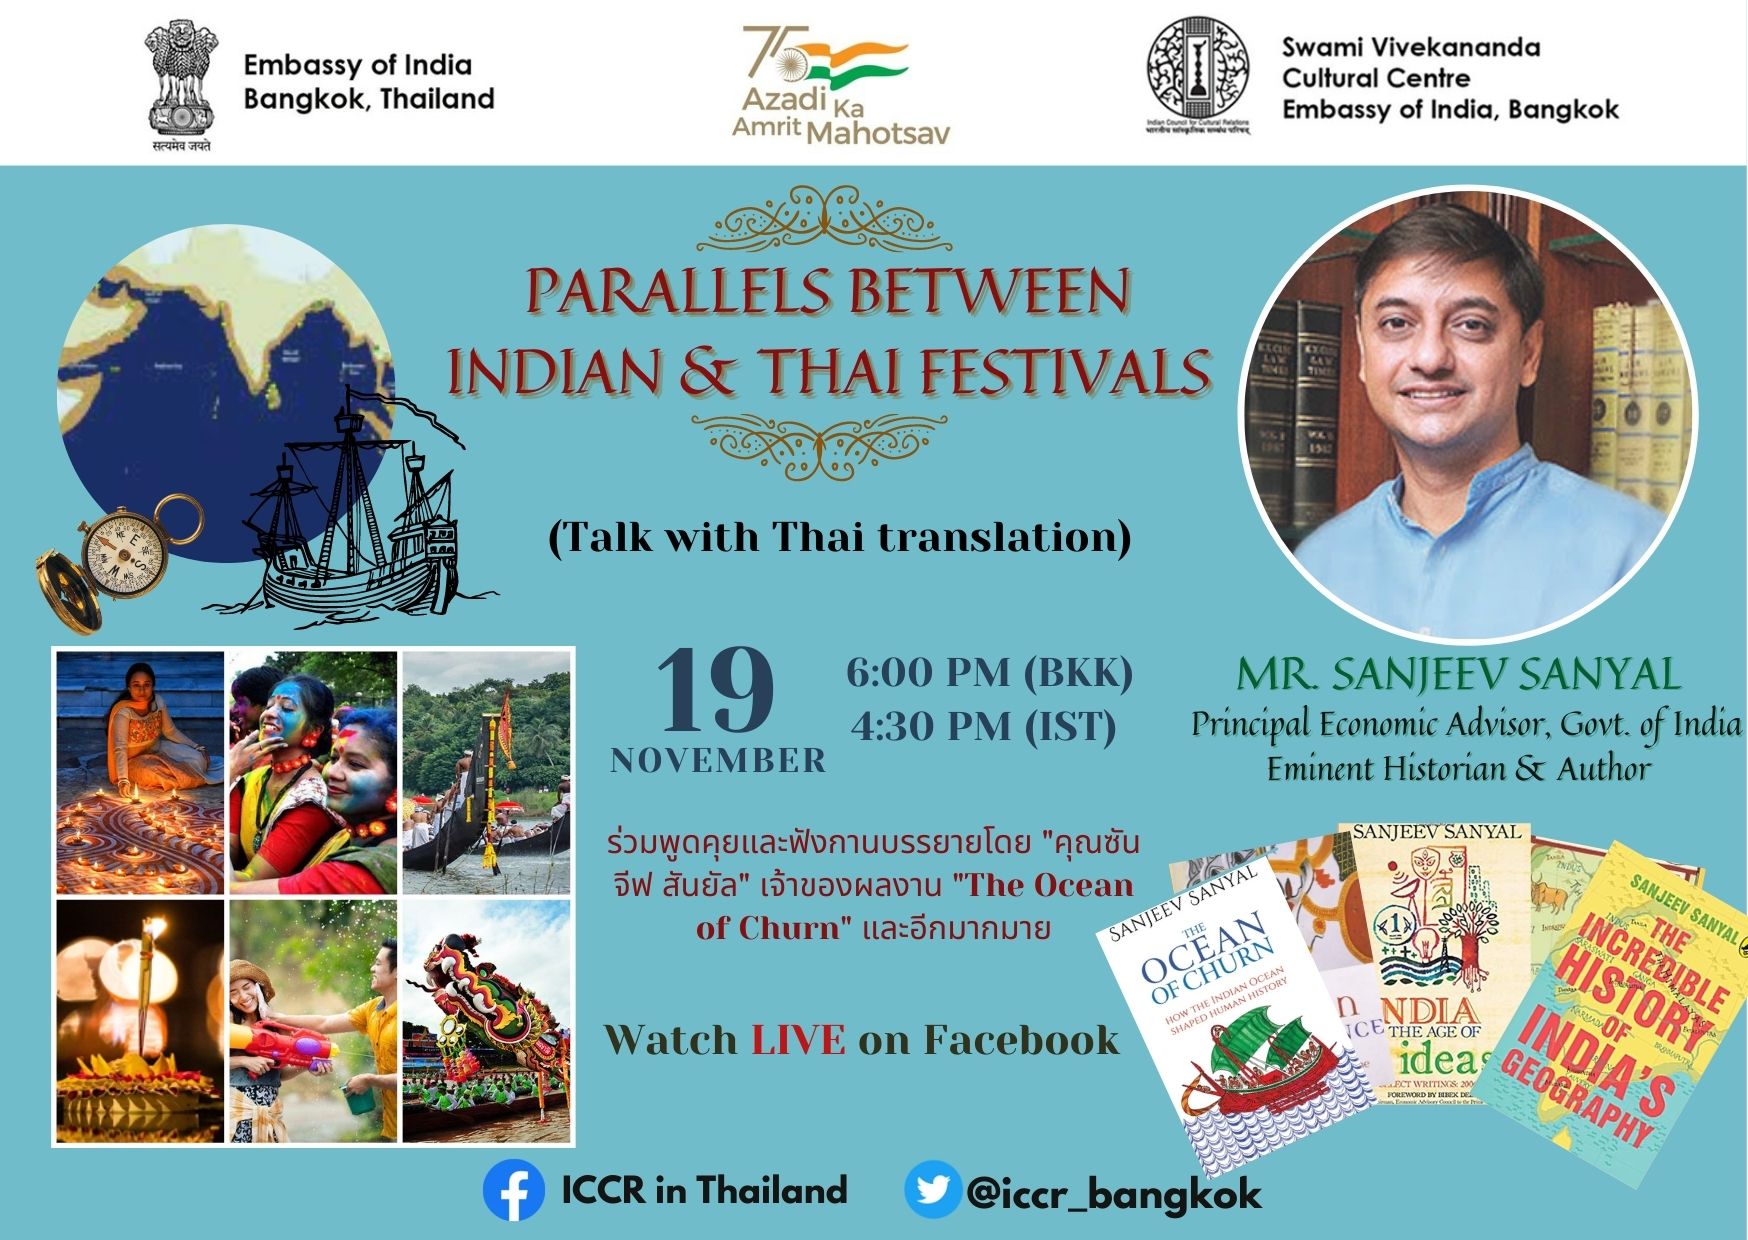 “Parallels between Indian & Thai festivals”